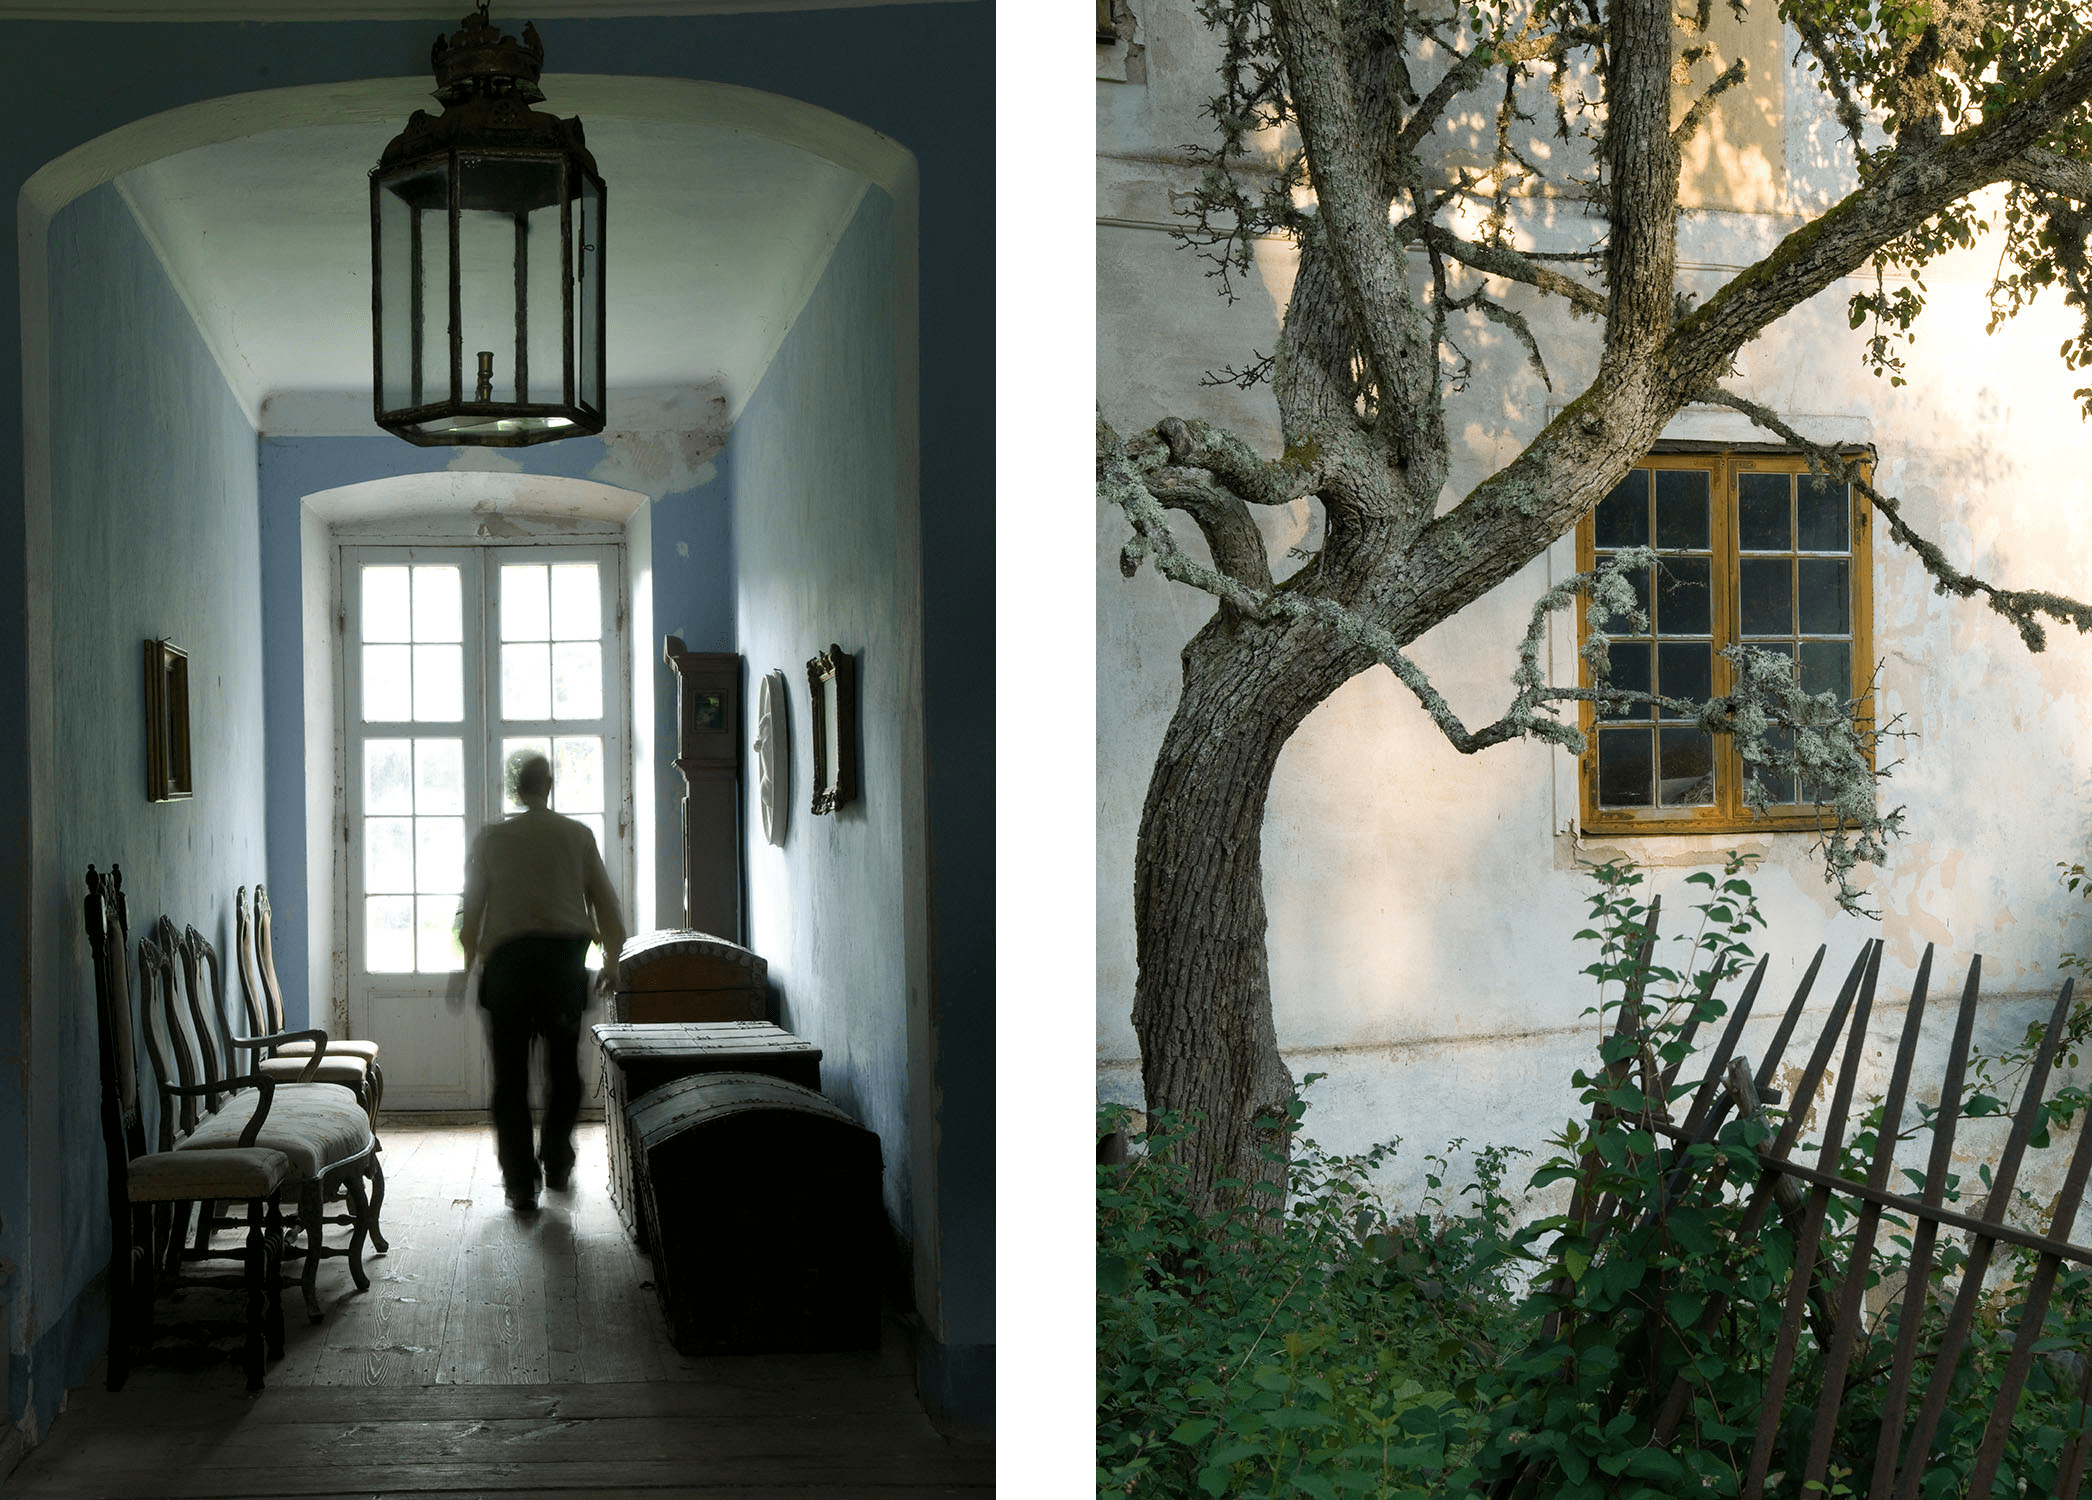 Classical Swedish Interiors